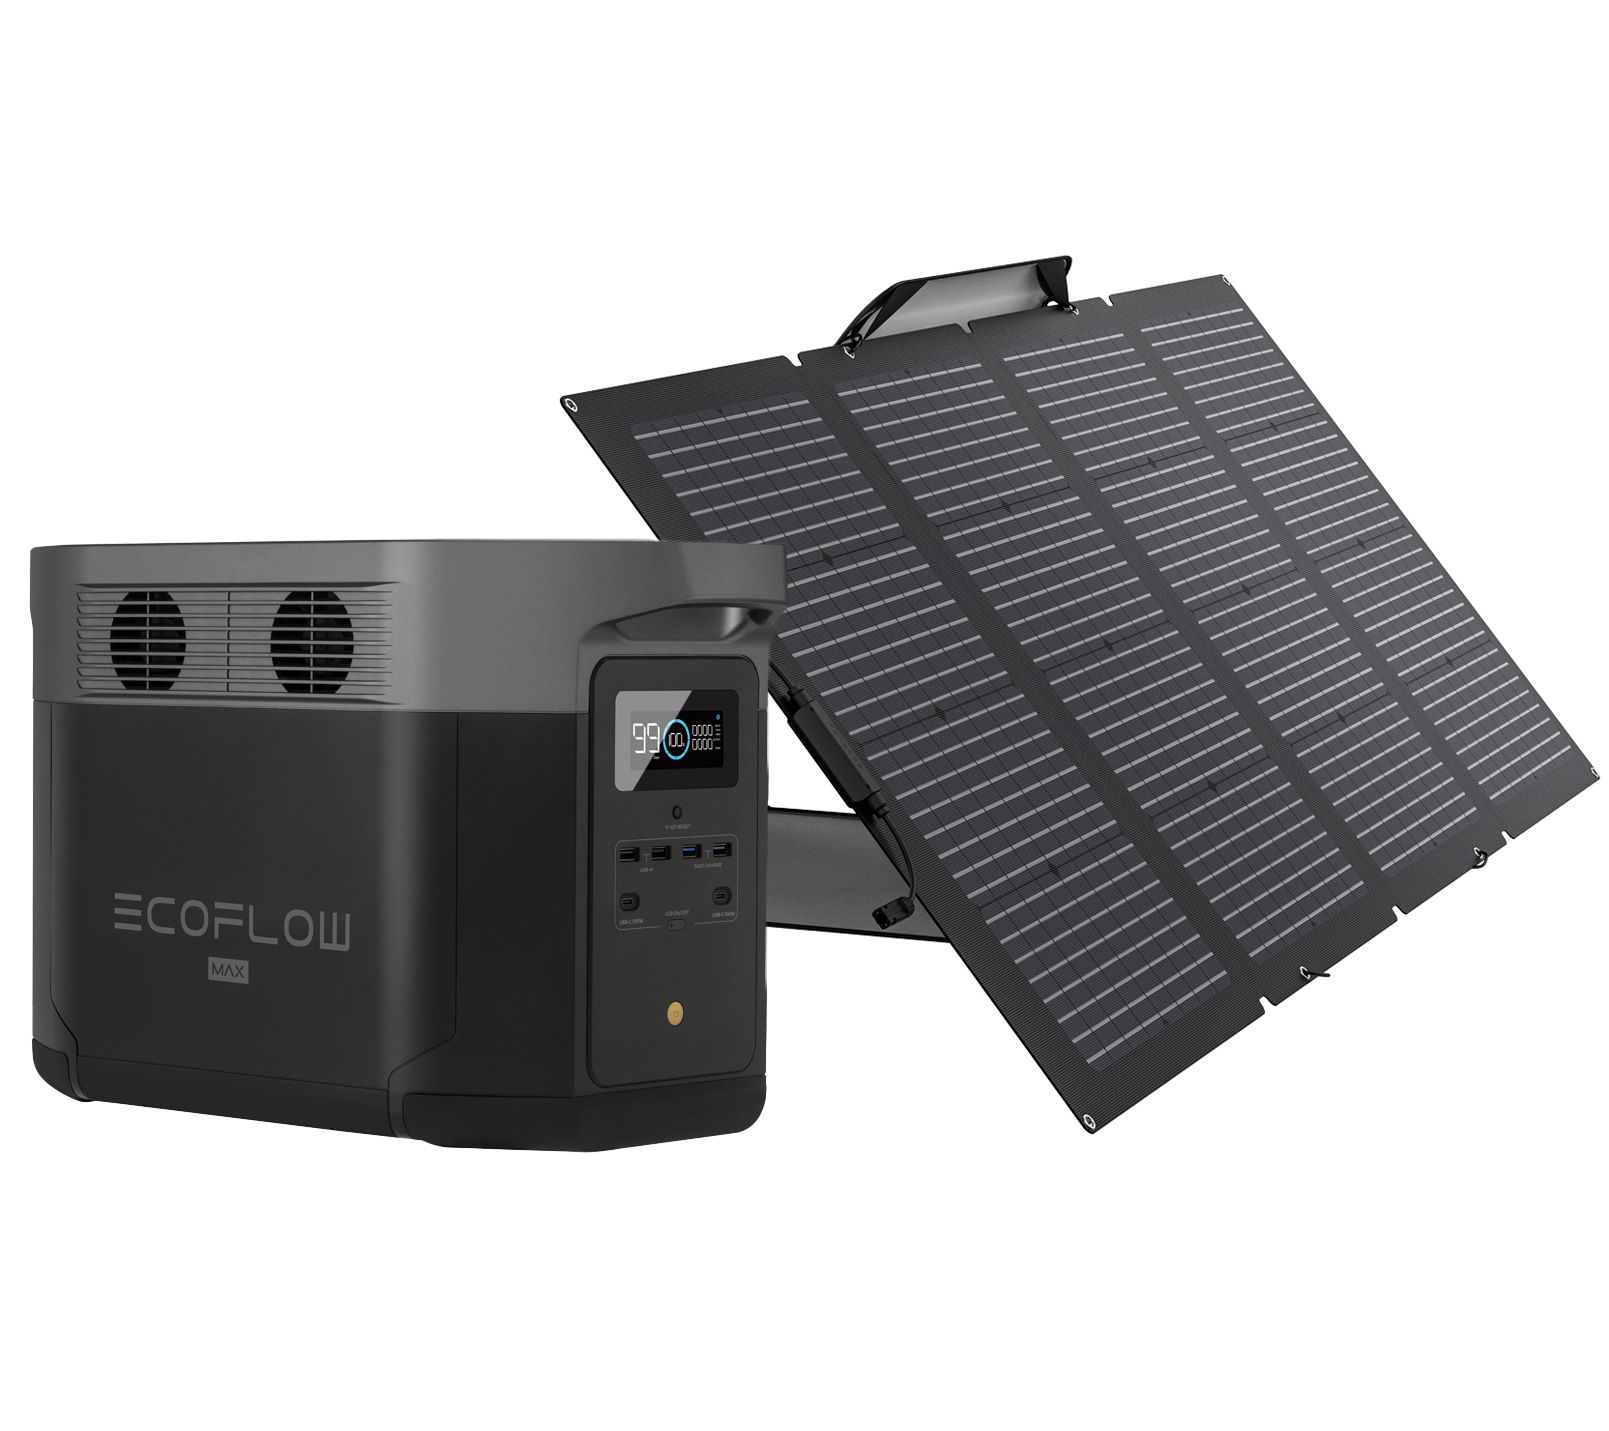 EcoFlow DELTA Max 1600 - Portable Power Supply Store